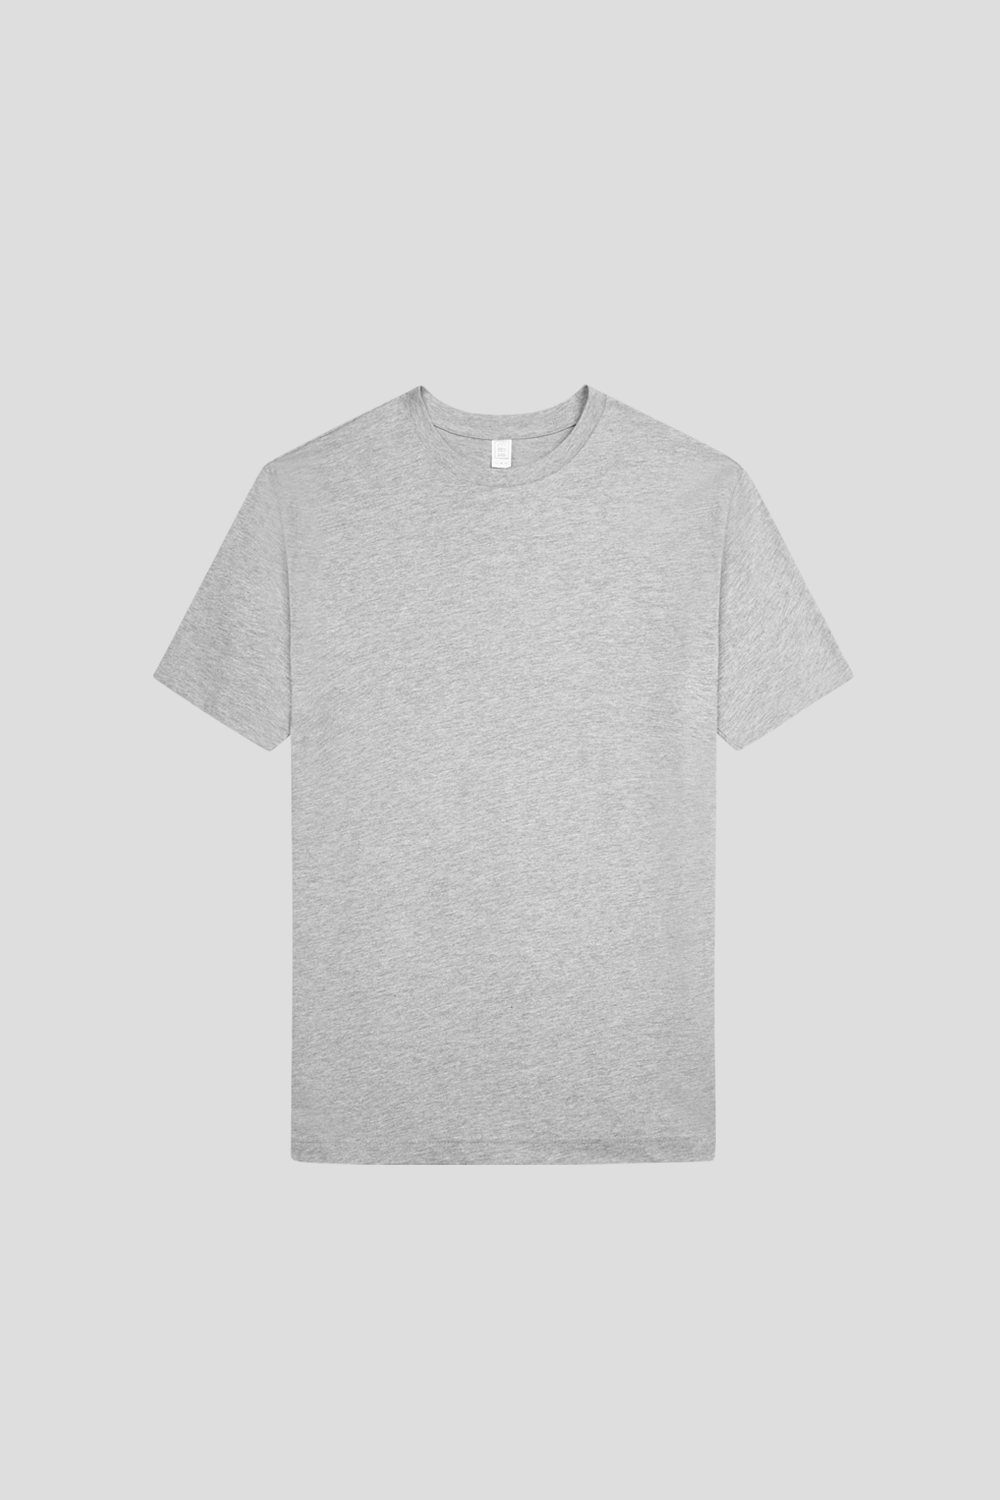 Industry T-shirt Grey